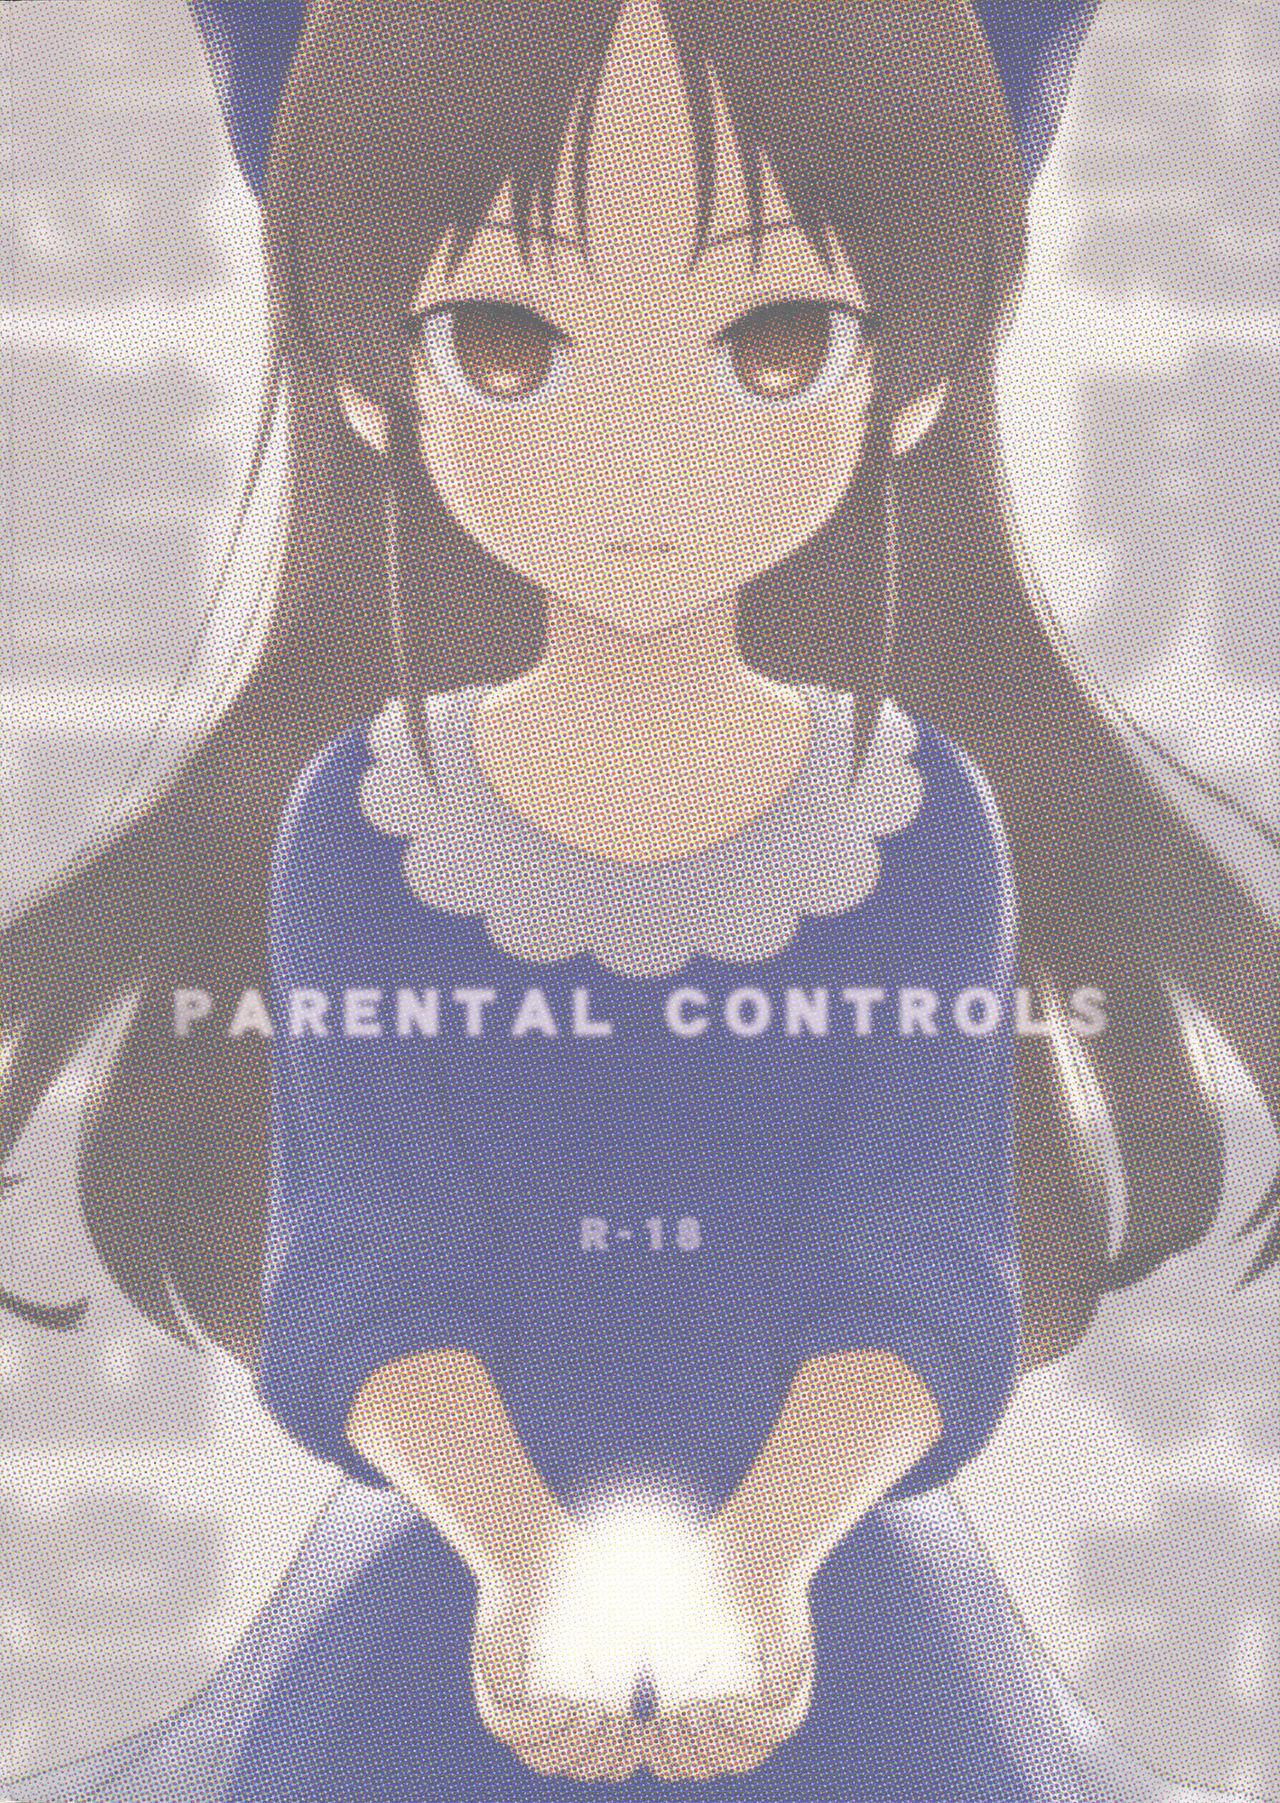 PARENTAL CONTROLS 34